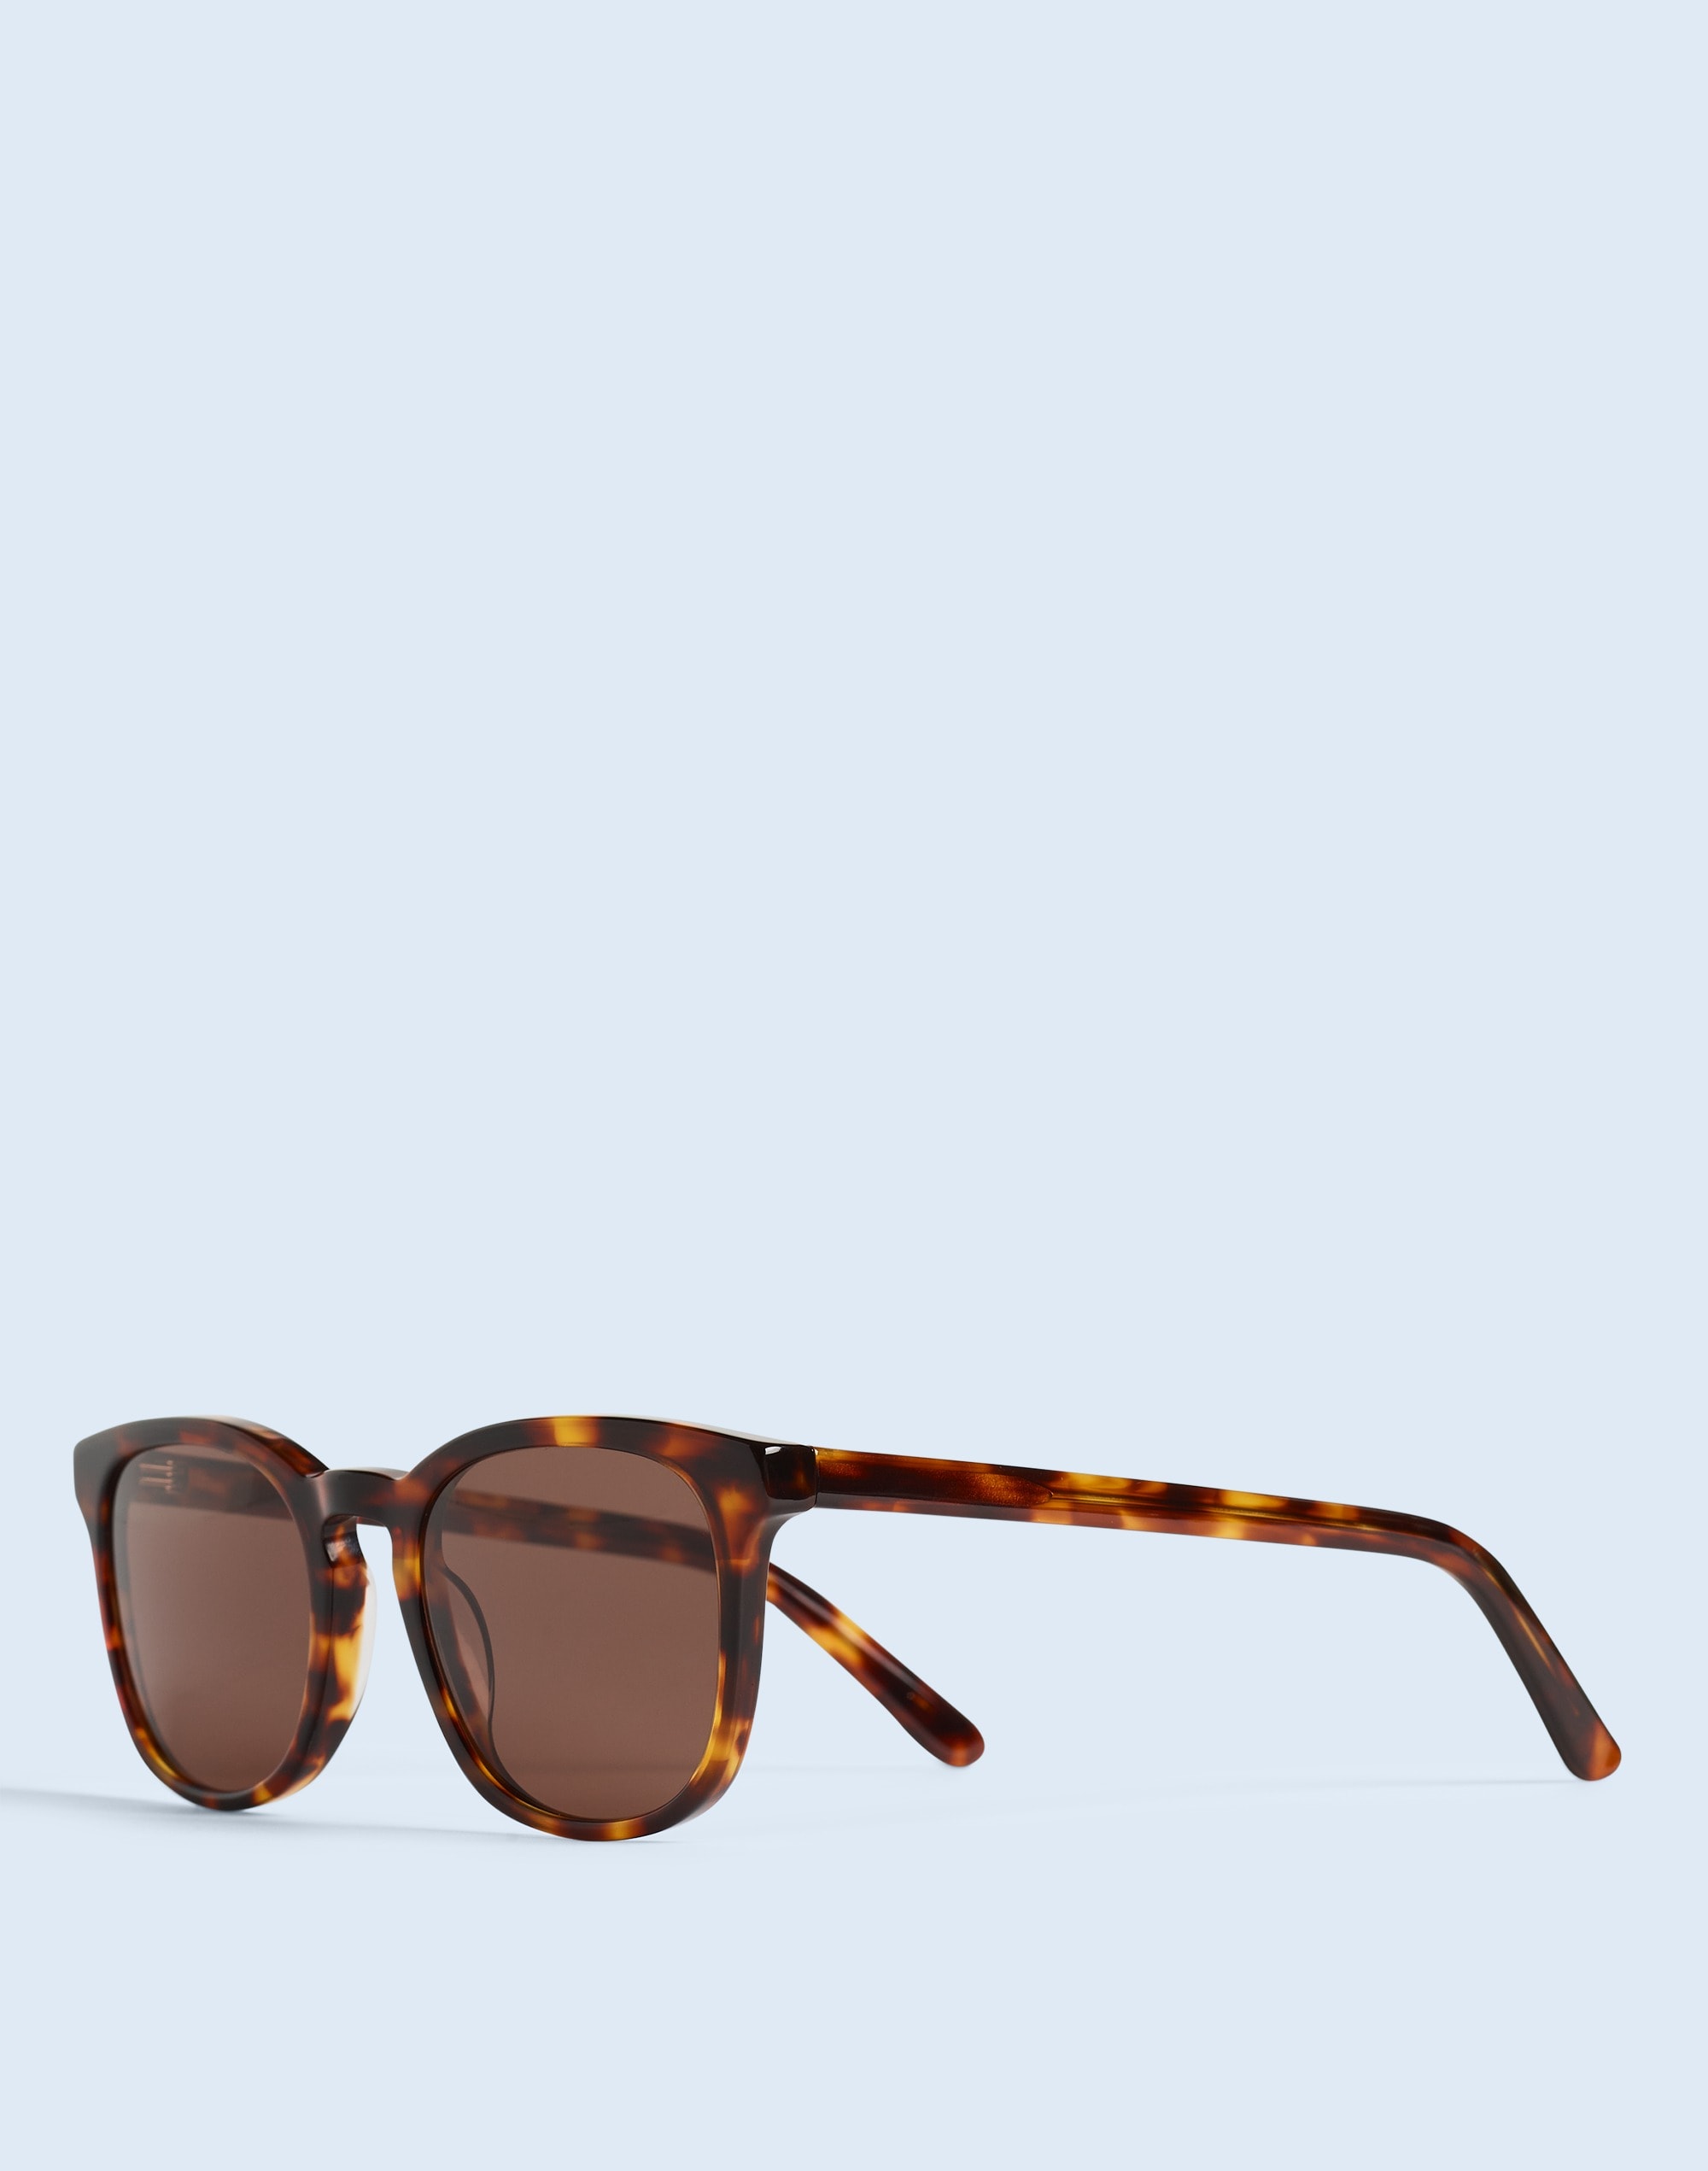 Mw Ashcroft Sunglasses In Brown